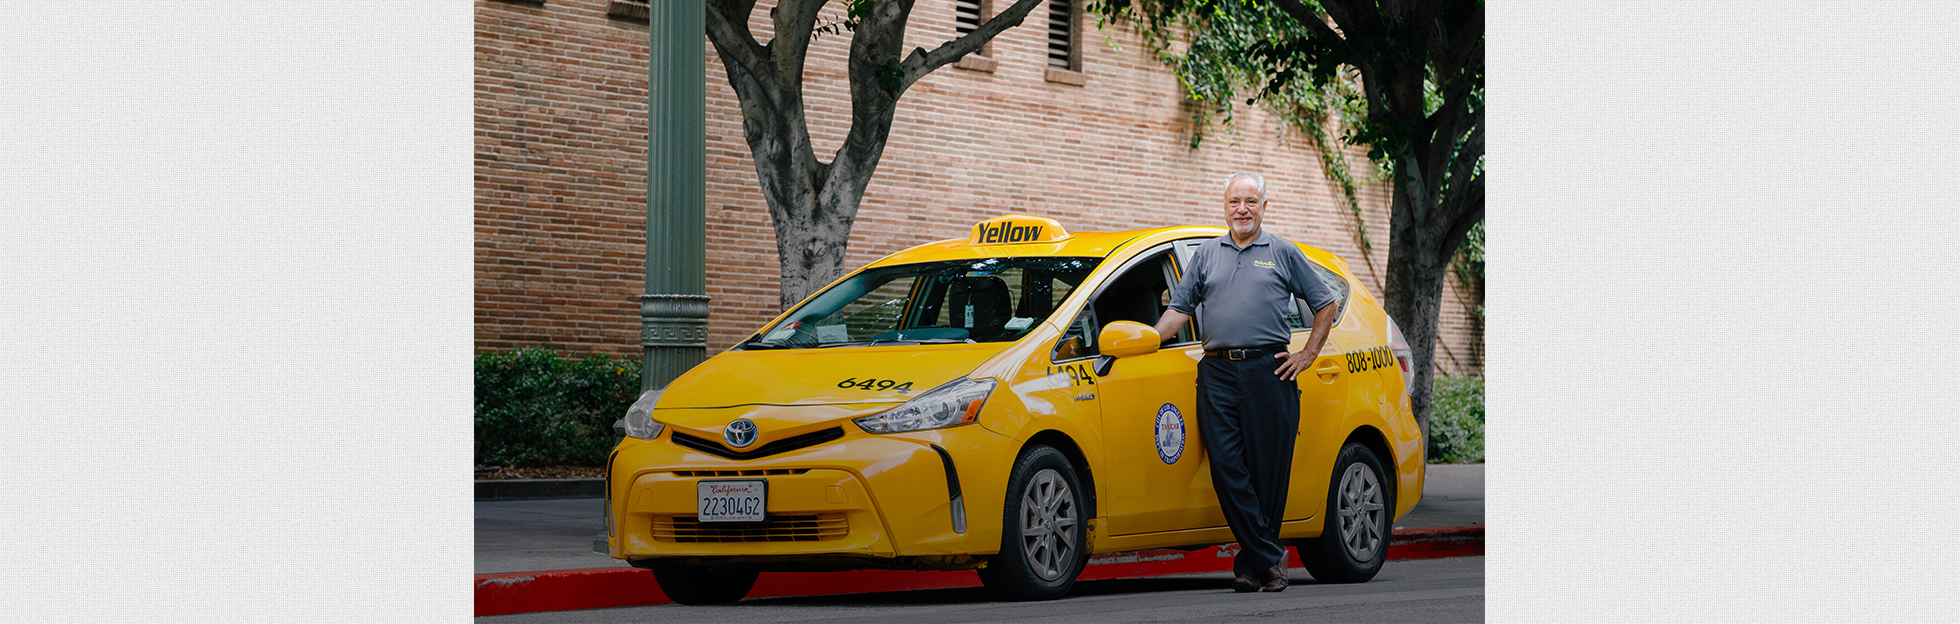 Torrance Taxi Cab